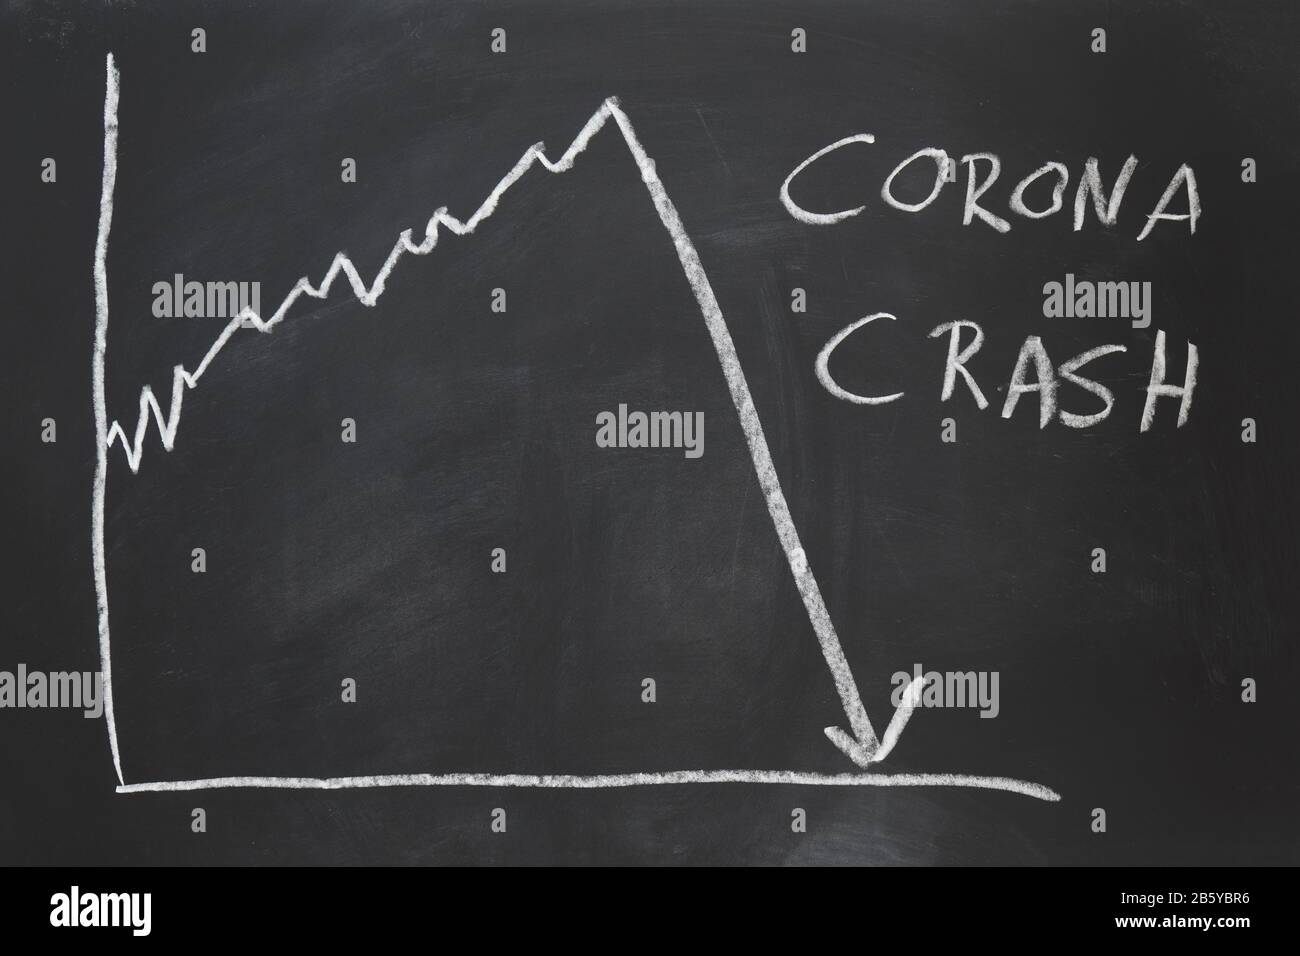 corona crash - hand-drawn graph on chalkboard showing stock market collapse or financial economy crisis caused by coronavirus Stock Photo